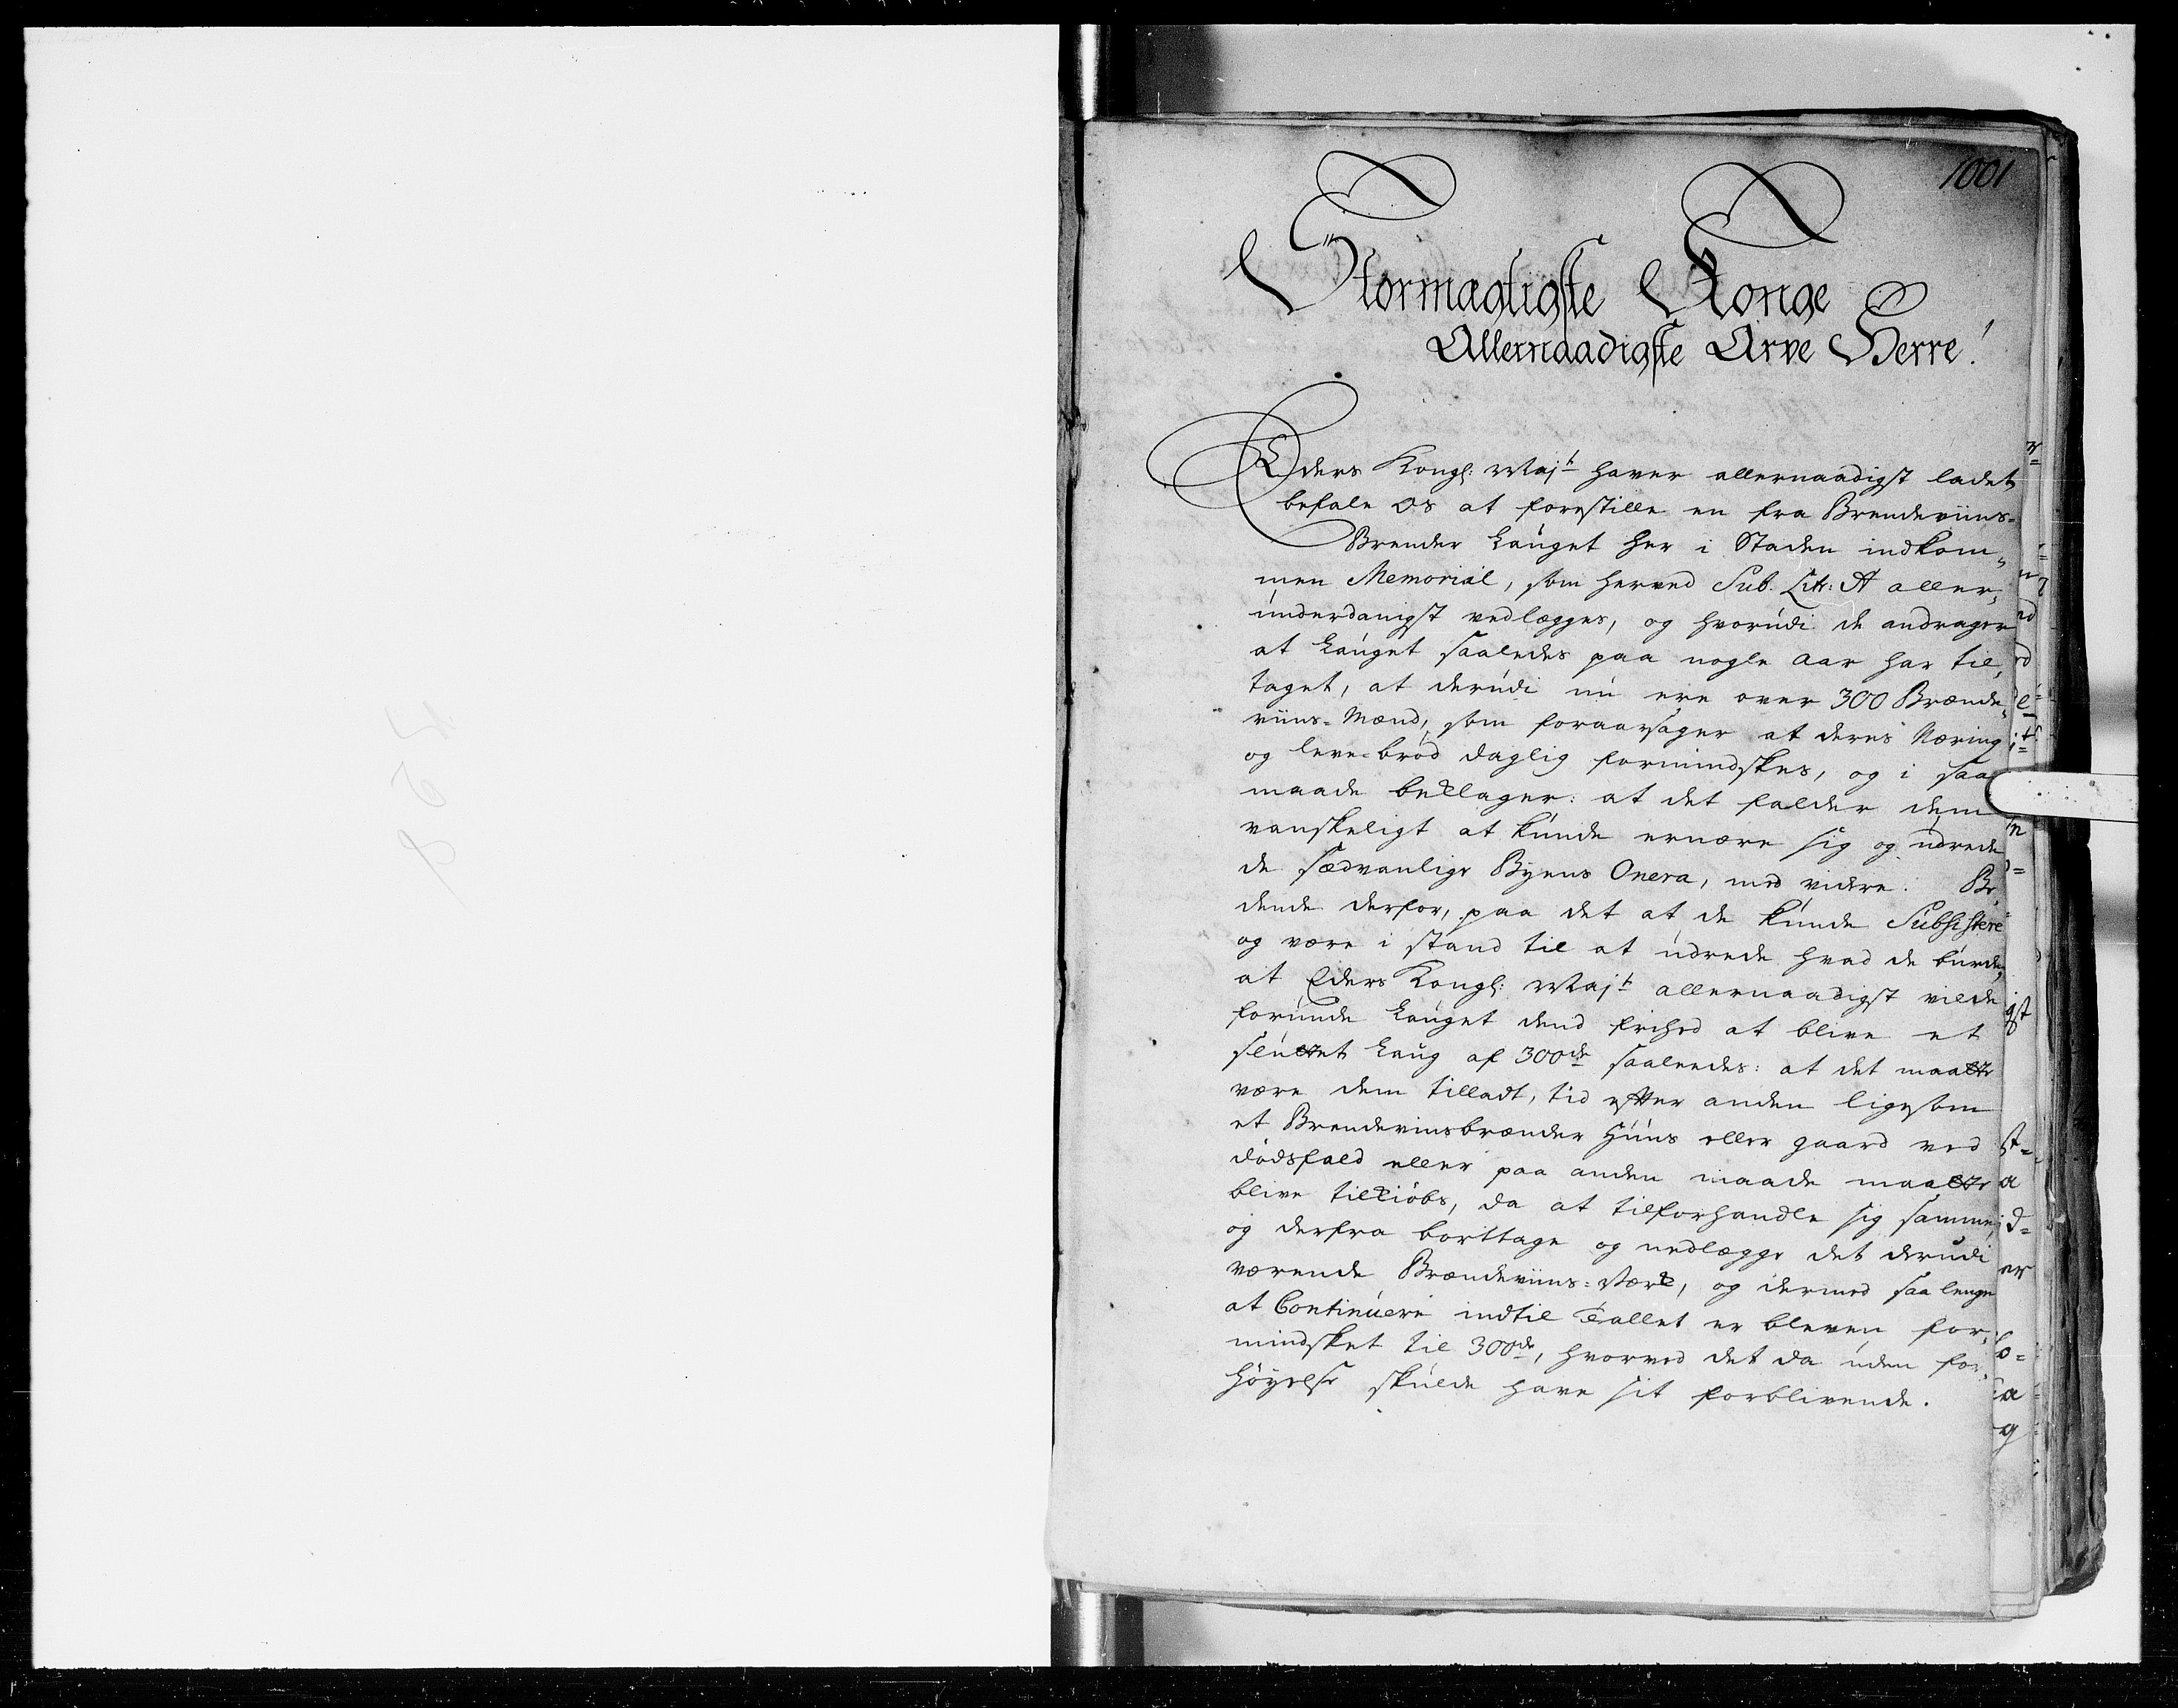 Kommercekollegiet, Dansk-Norske Sekretariat (1736-1771) / Kommercedeputationen (1771-1773), DRA/A-0002/-/009: Forestillinger, 1753-1756